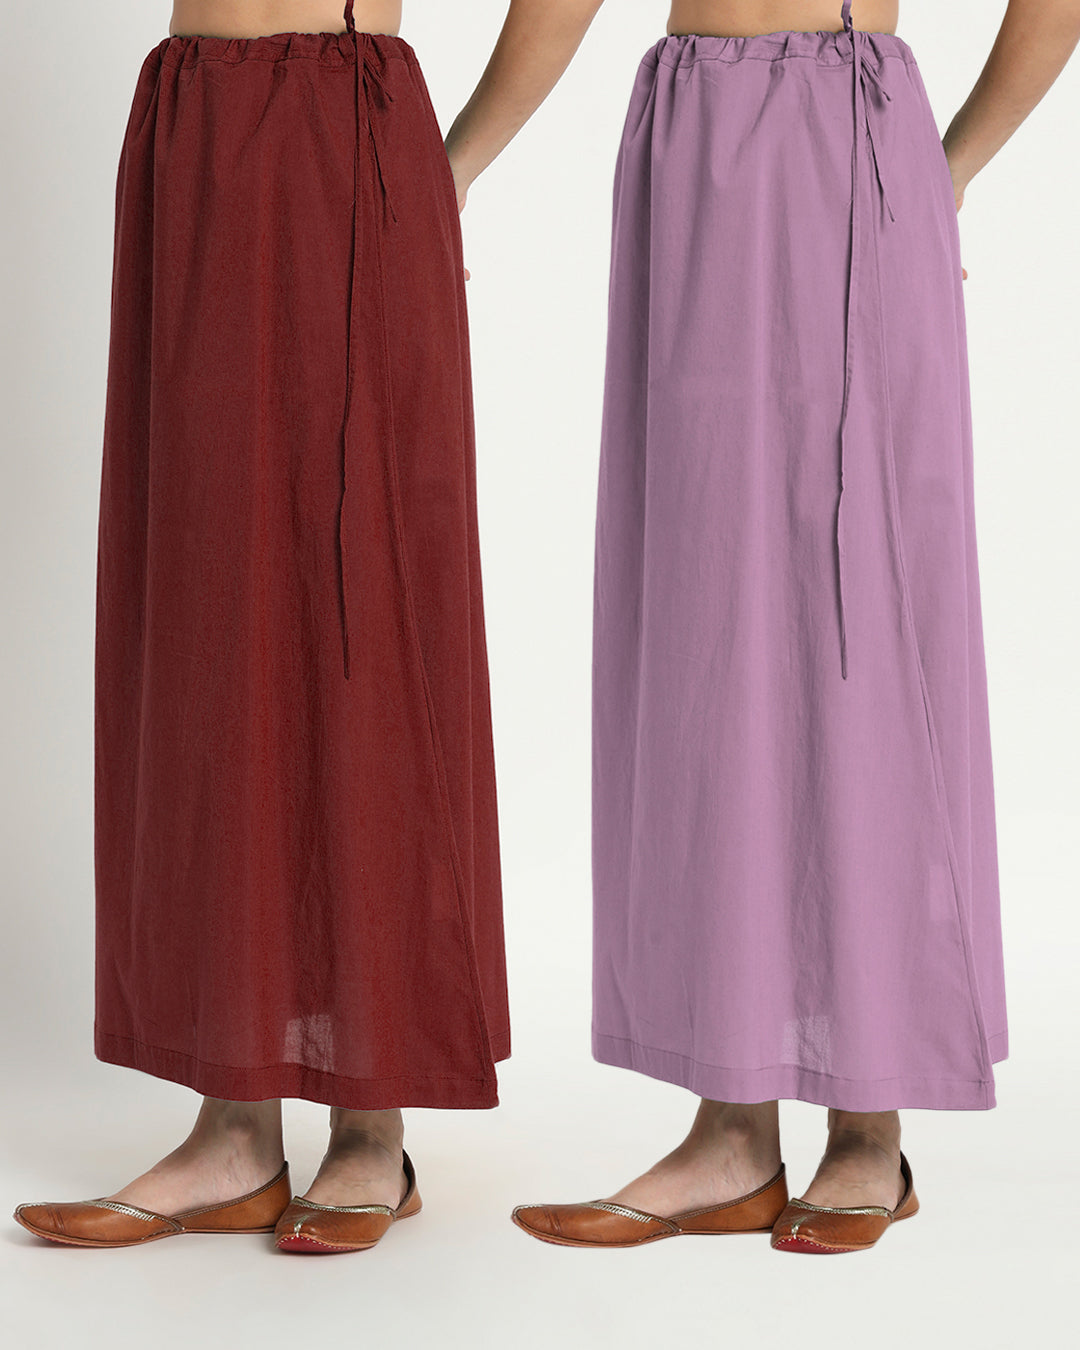 Combo: Russet Red & Iris Pink Peekaboo Petticoat- Set of 2